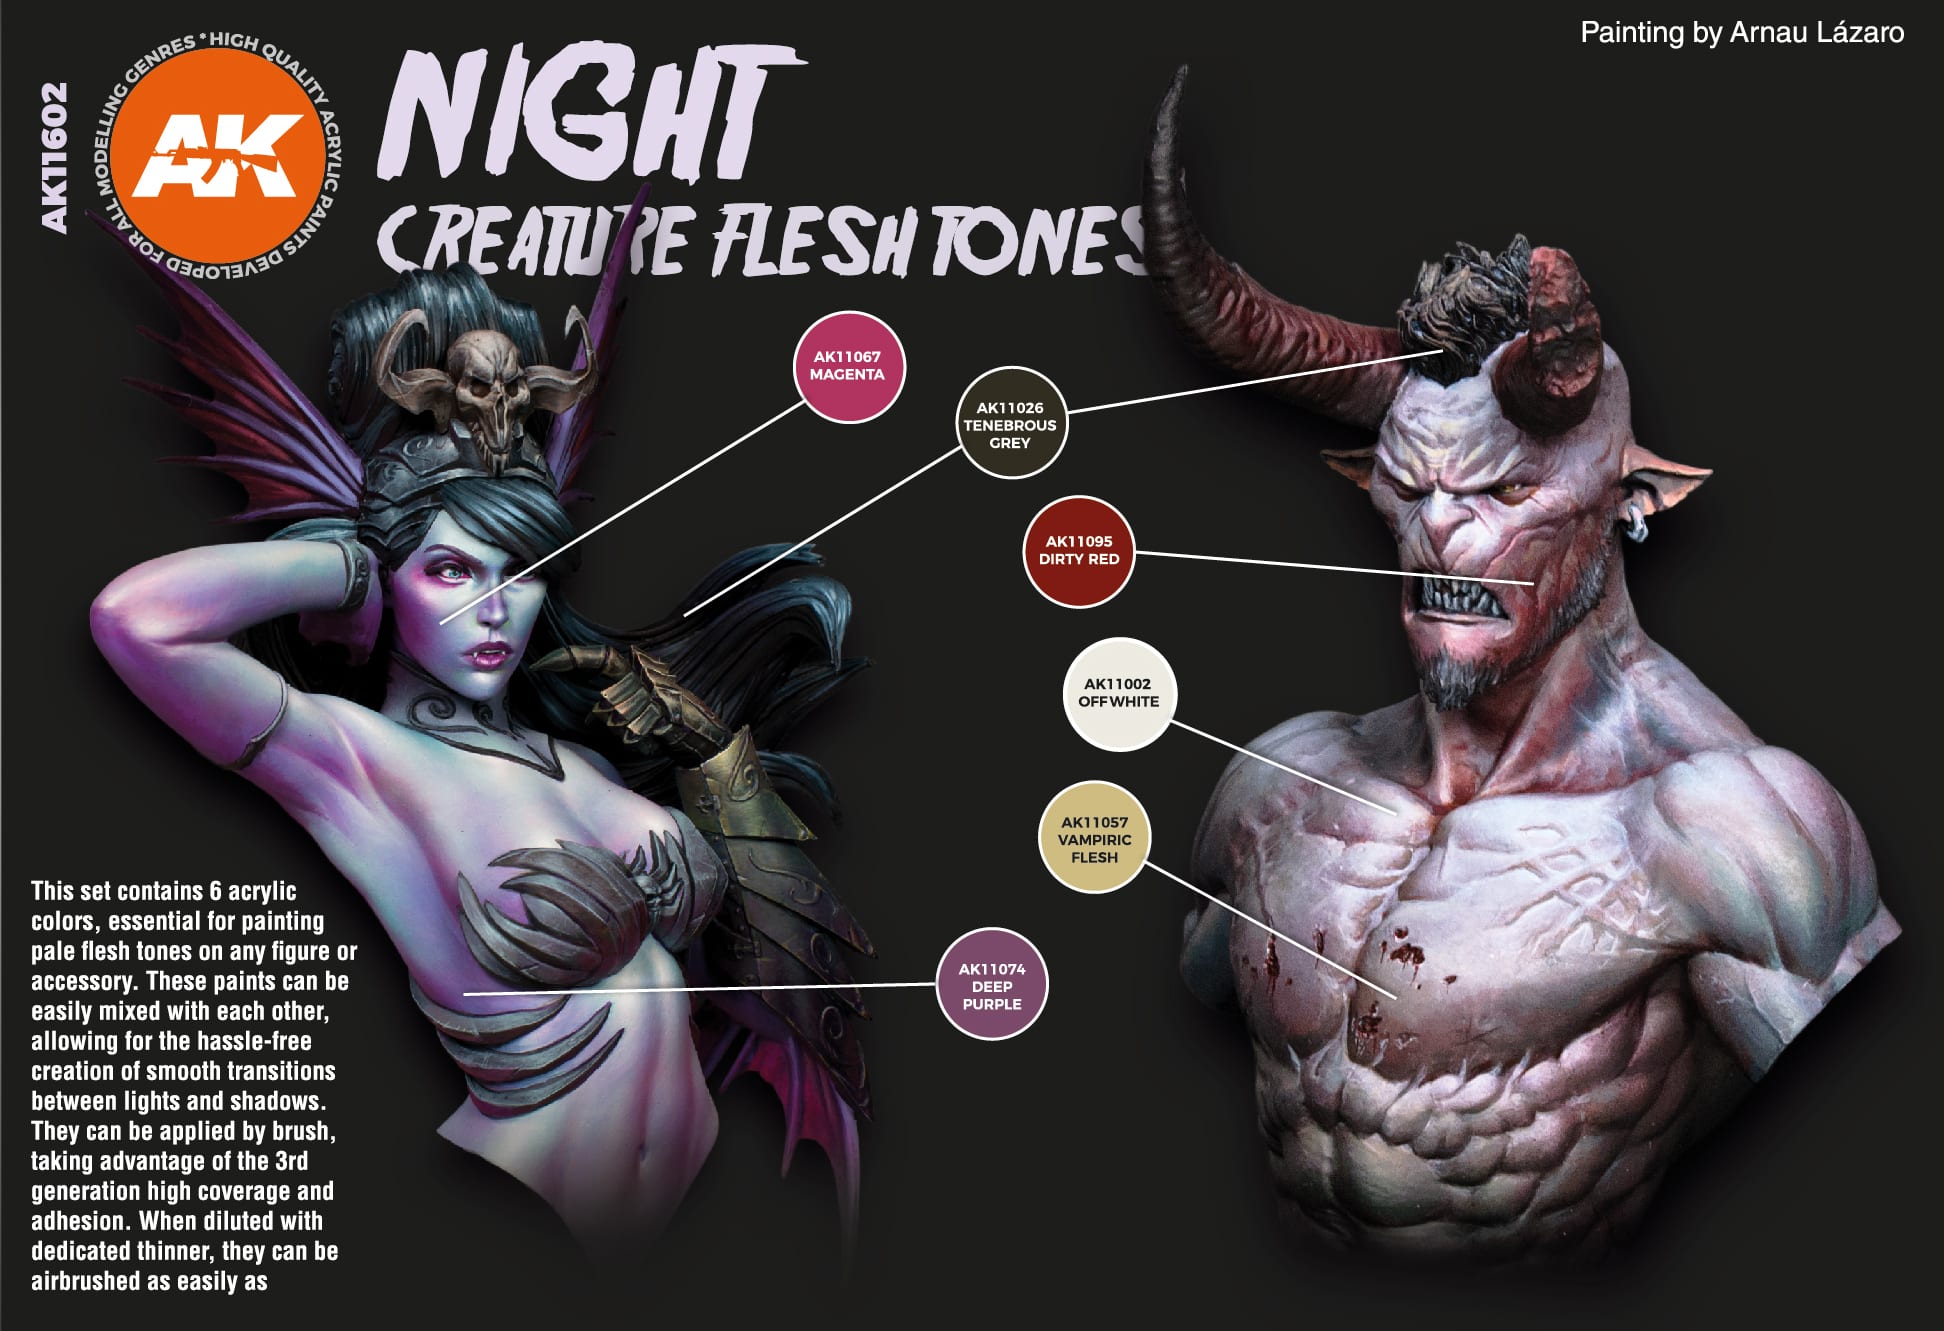 Buy NIGHT CREATURES FLESH TONE online for 16,50€